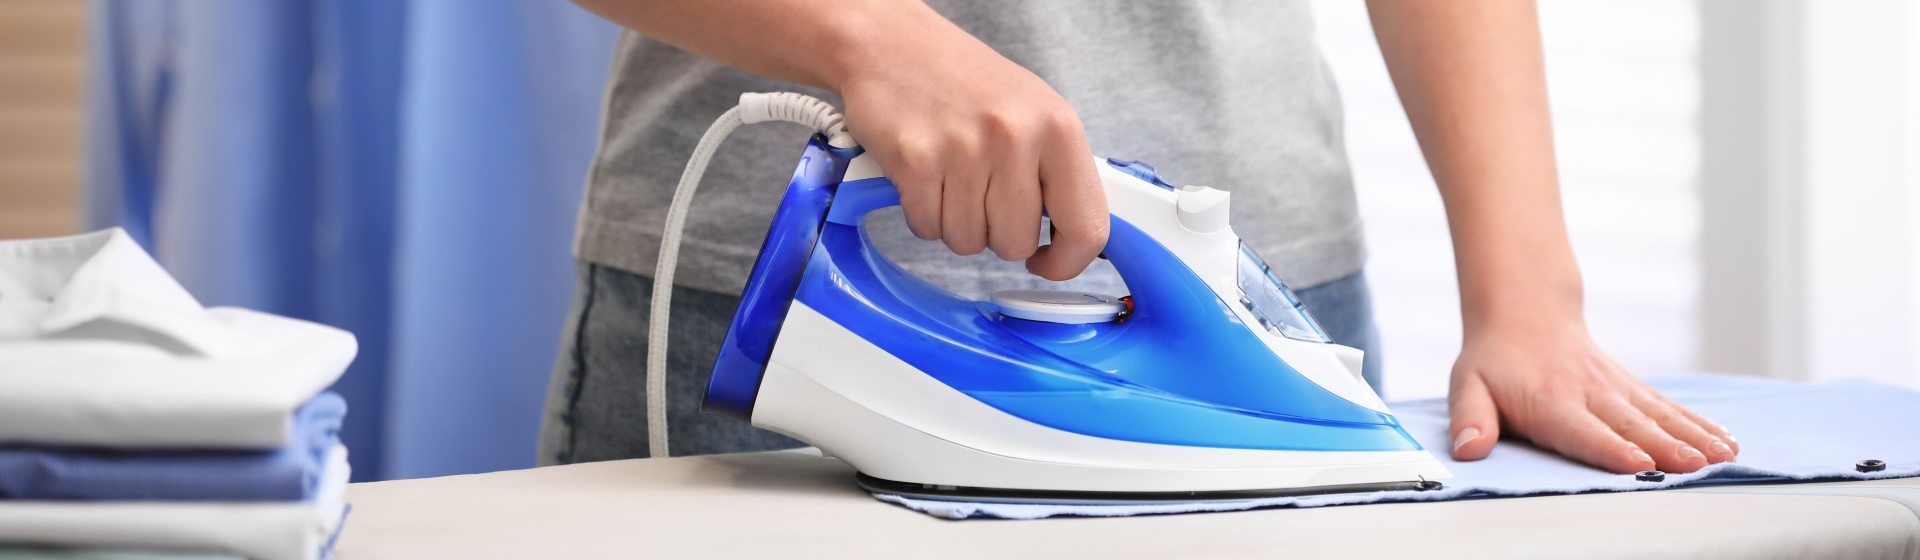 Como limpar ferro de passar roupa